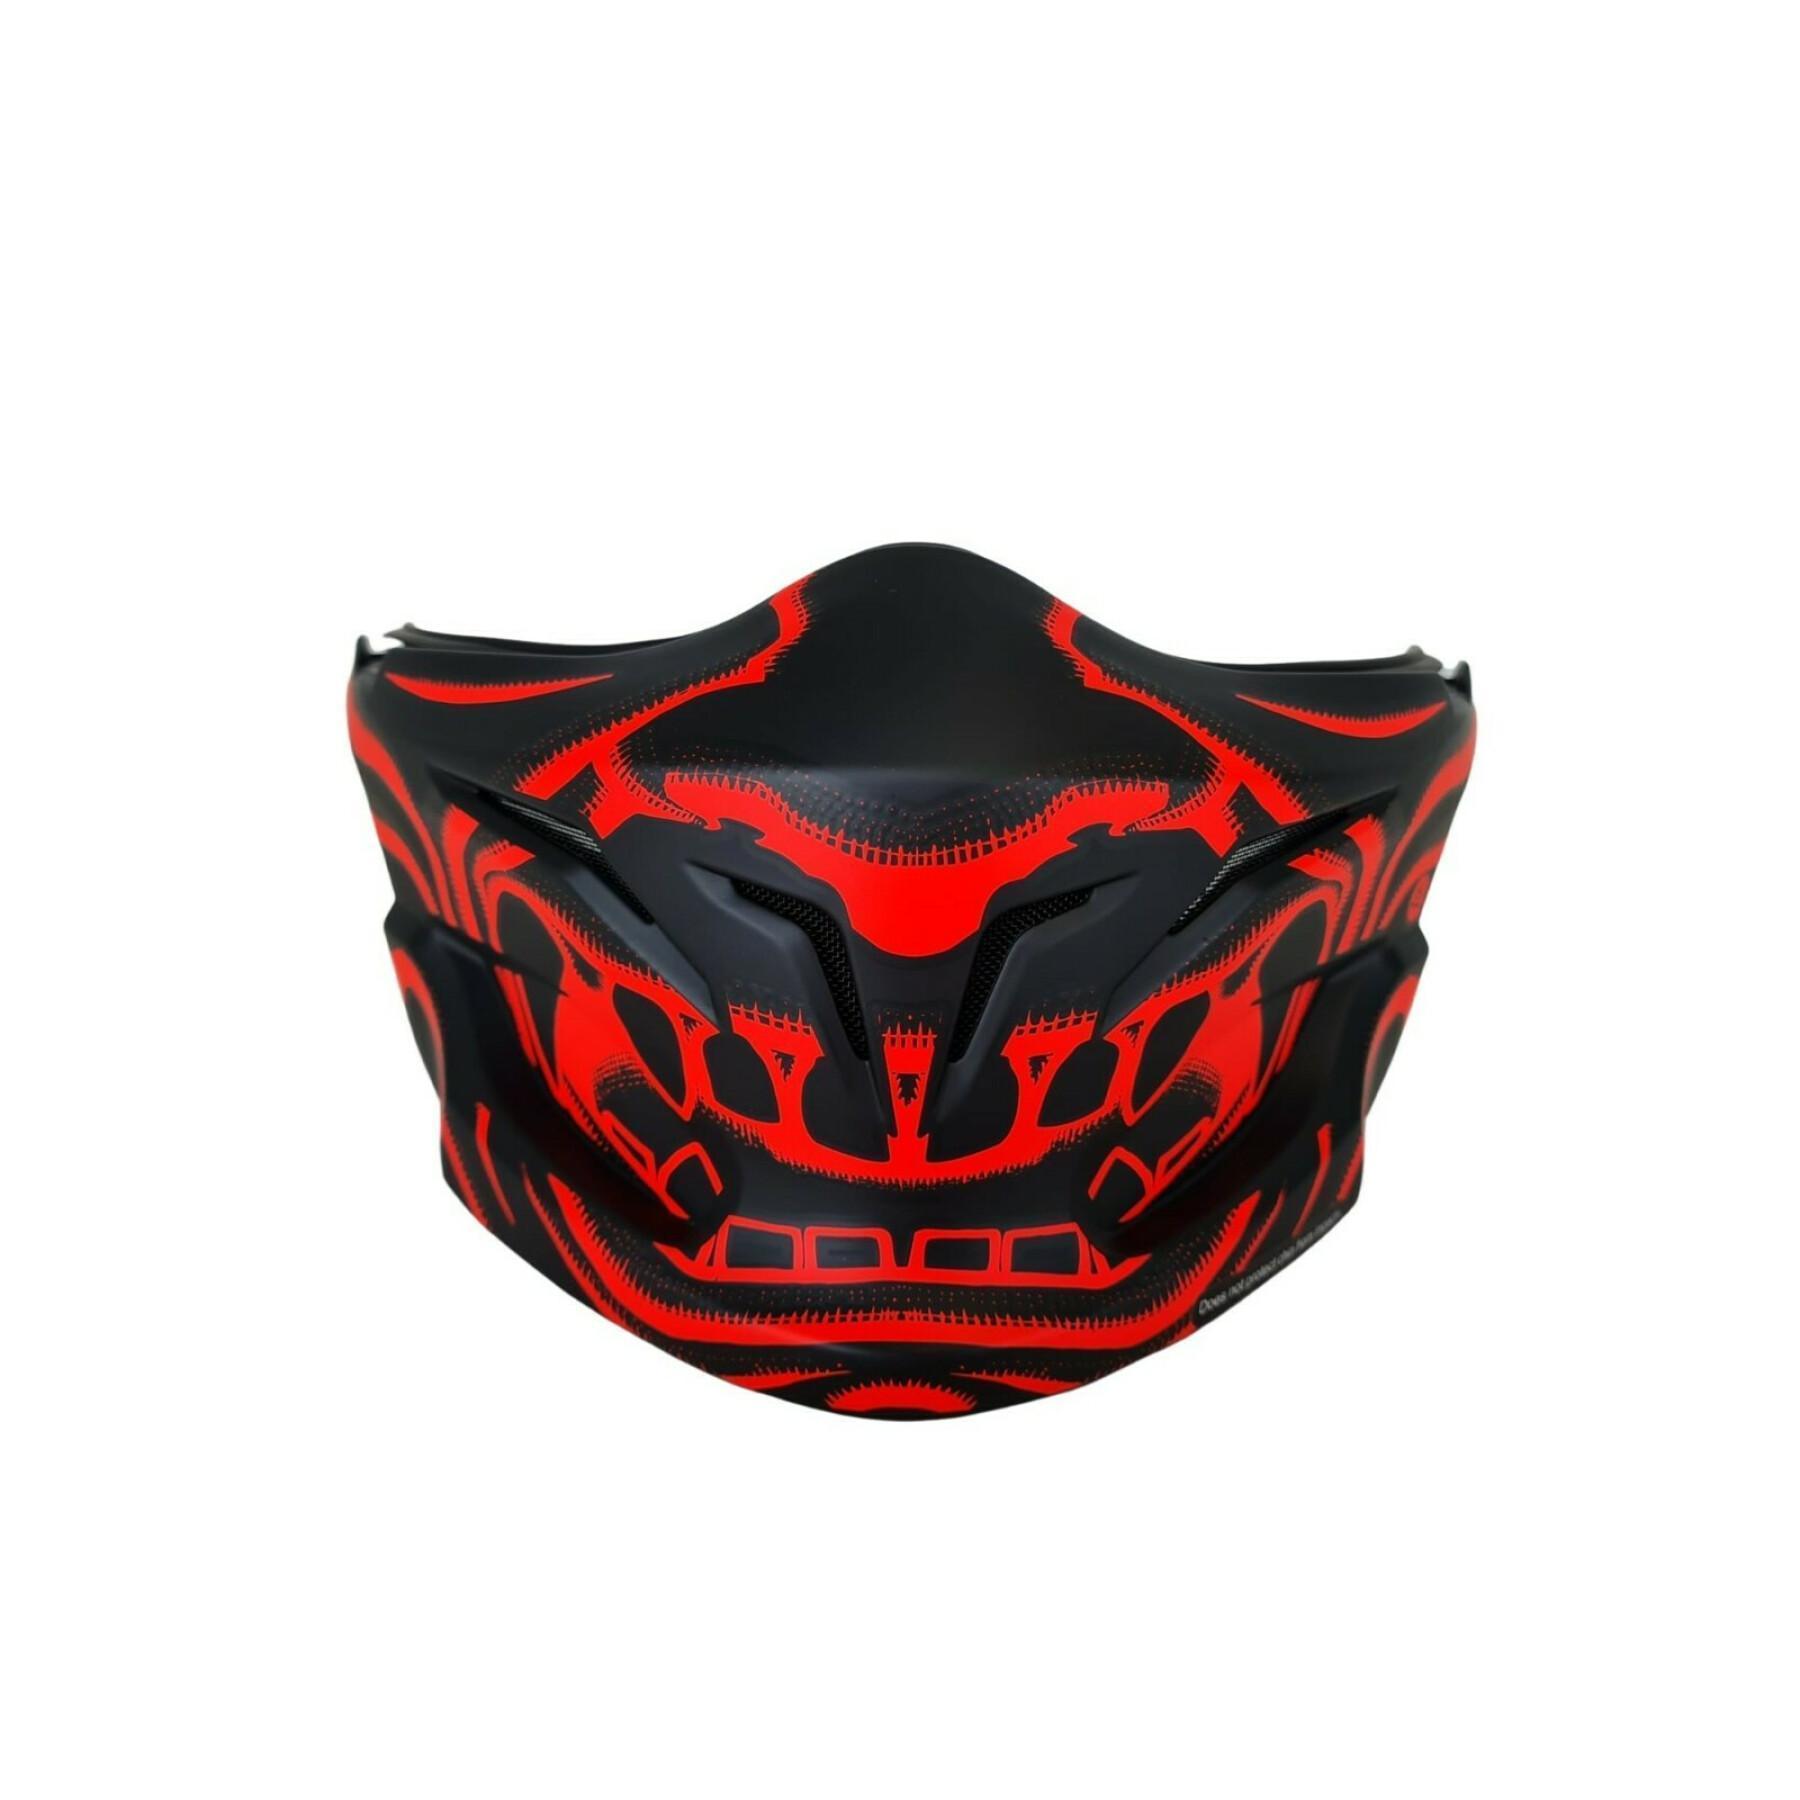 Motorrad-Maske Scorpion Exo-Combat evo mask SAMURAI